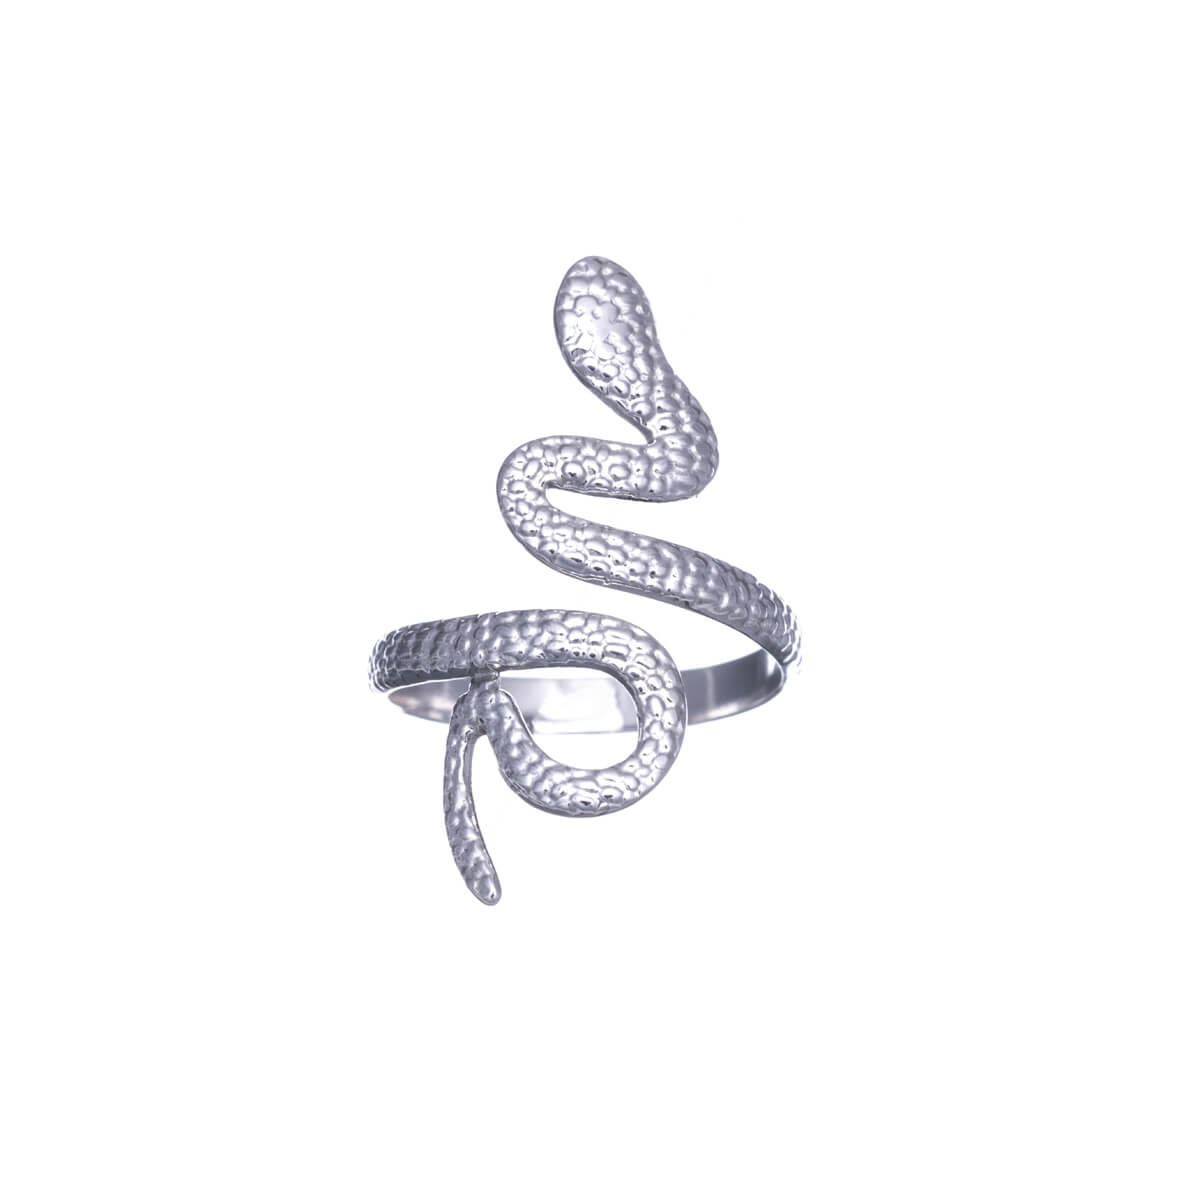 Käärme sormus yhdenkoon terässormus (Teräs 316L)